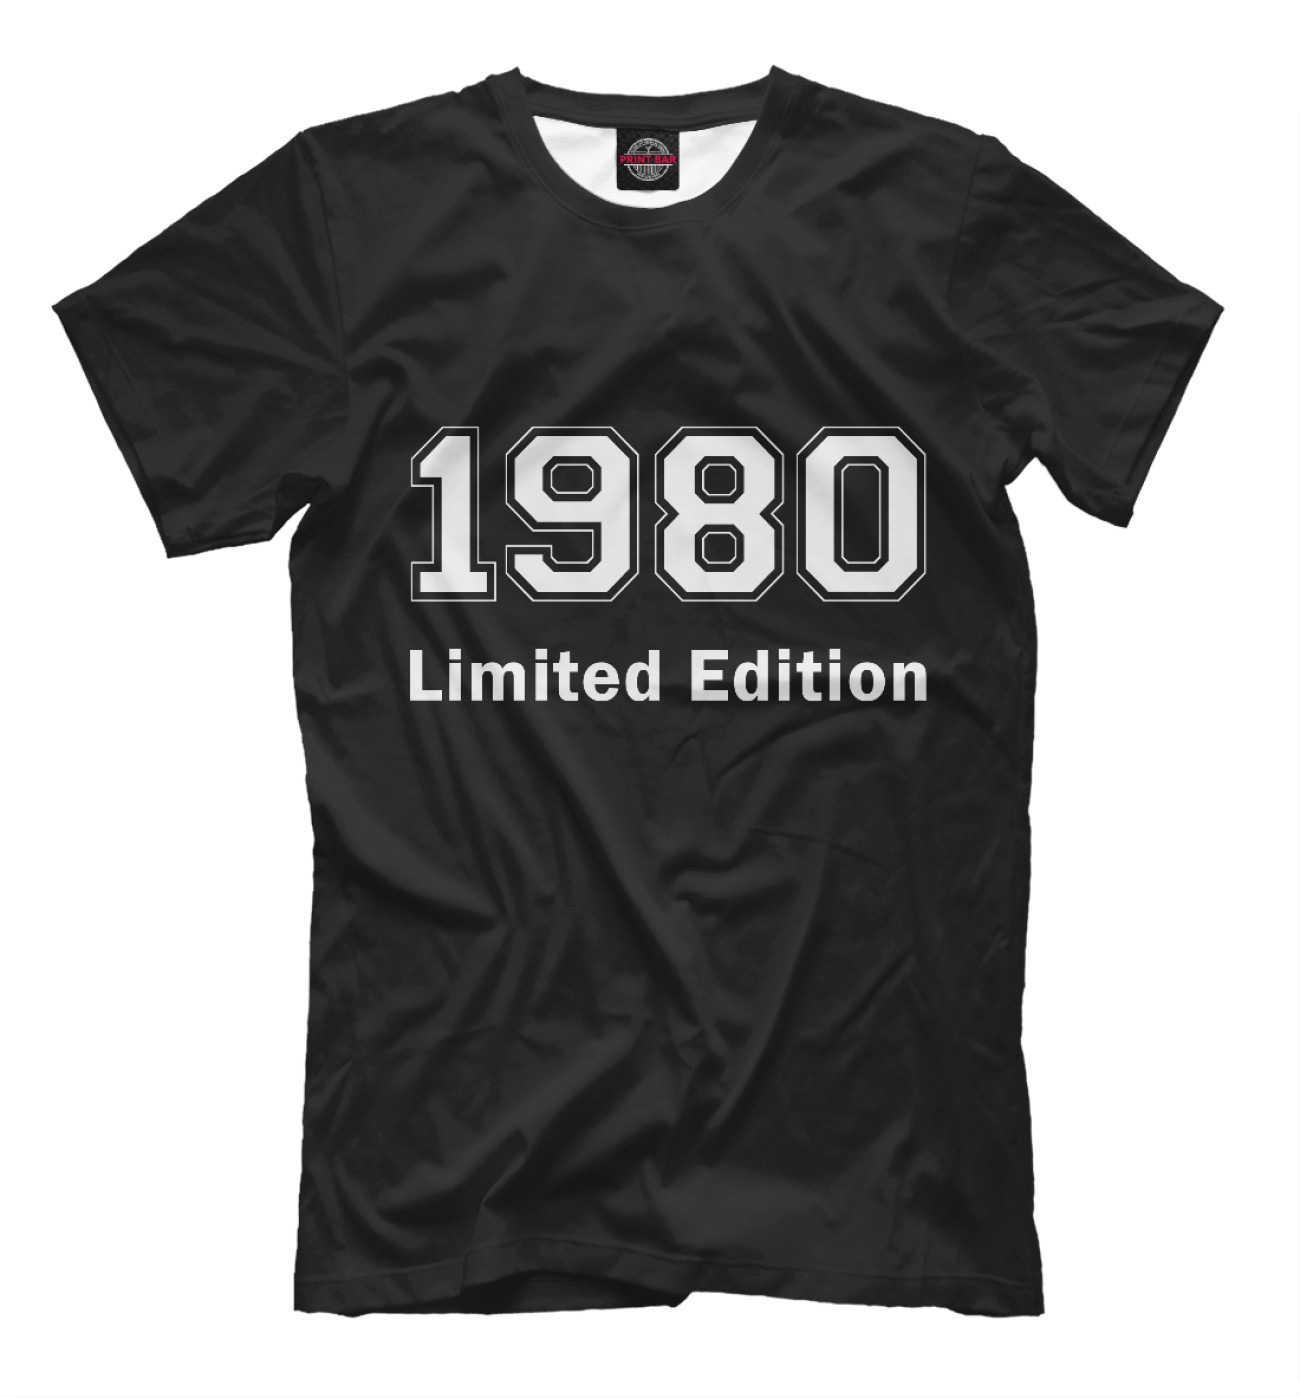 Мужская Футболка 1980 Limited Edition, артикул: DVH-768947-fut-2